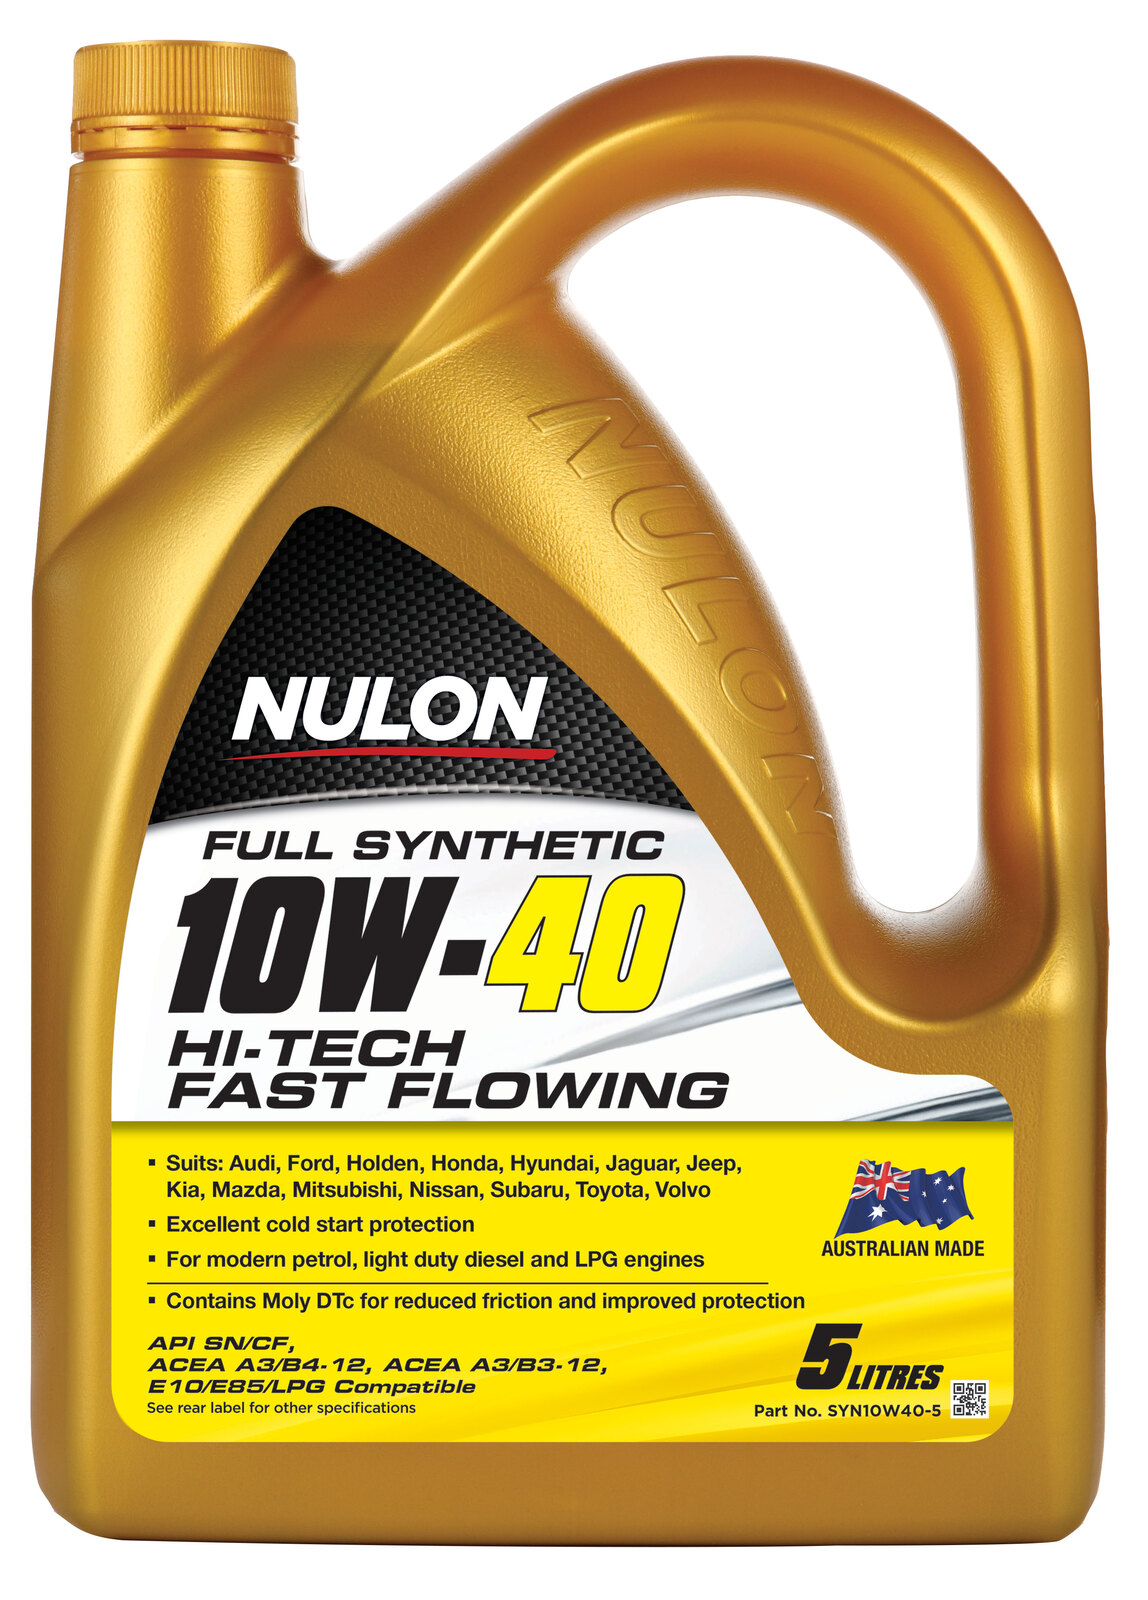 NULON Hi-Tech Fast Flowing Performance Oil, Each